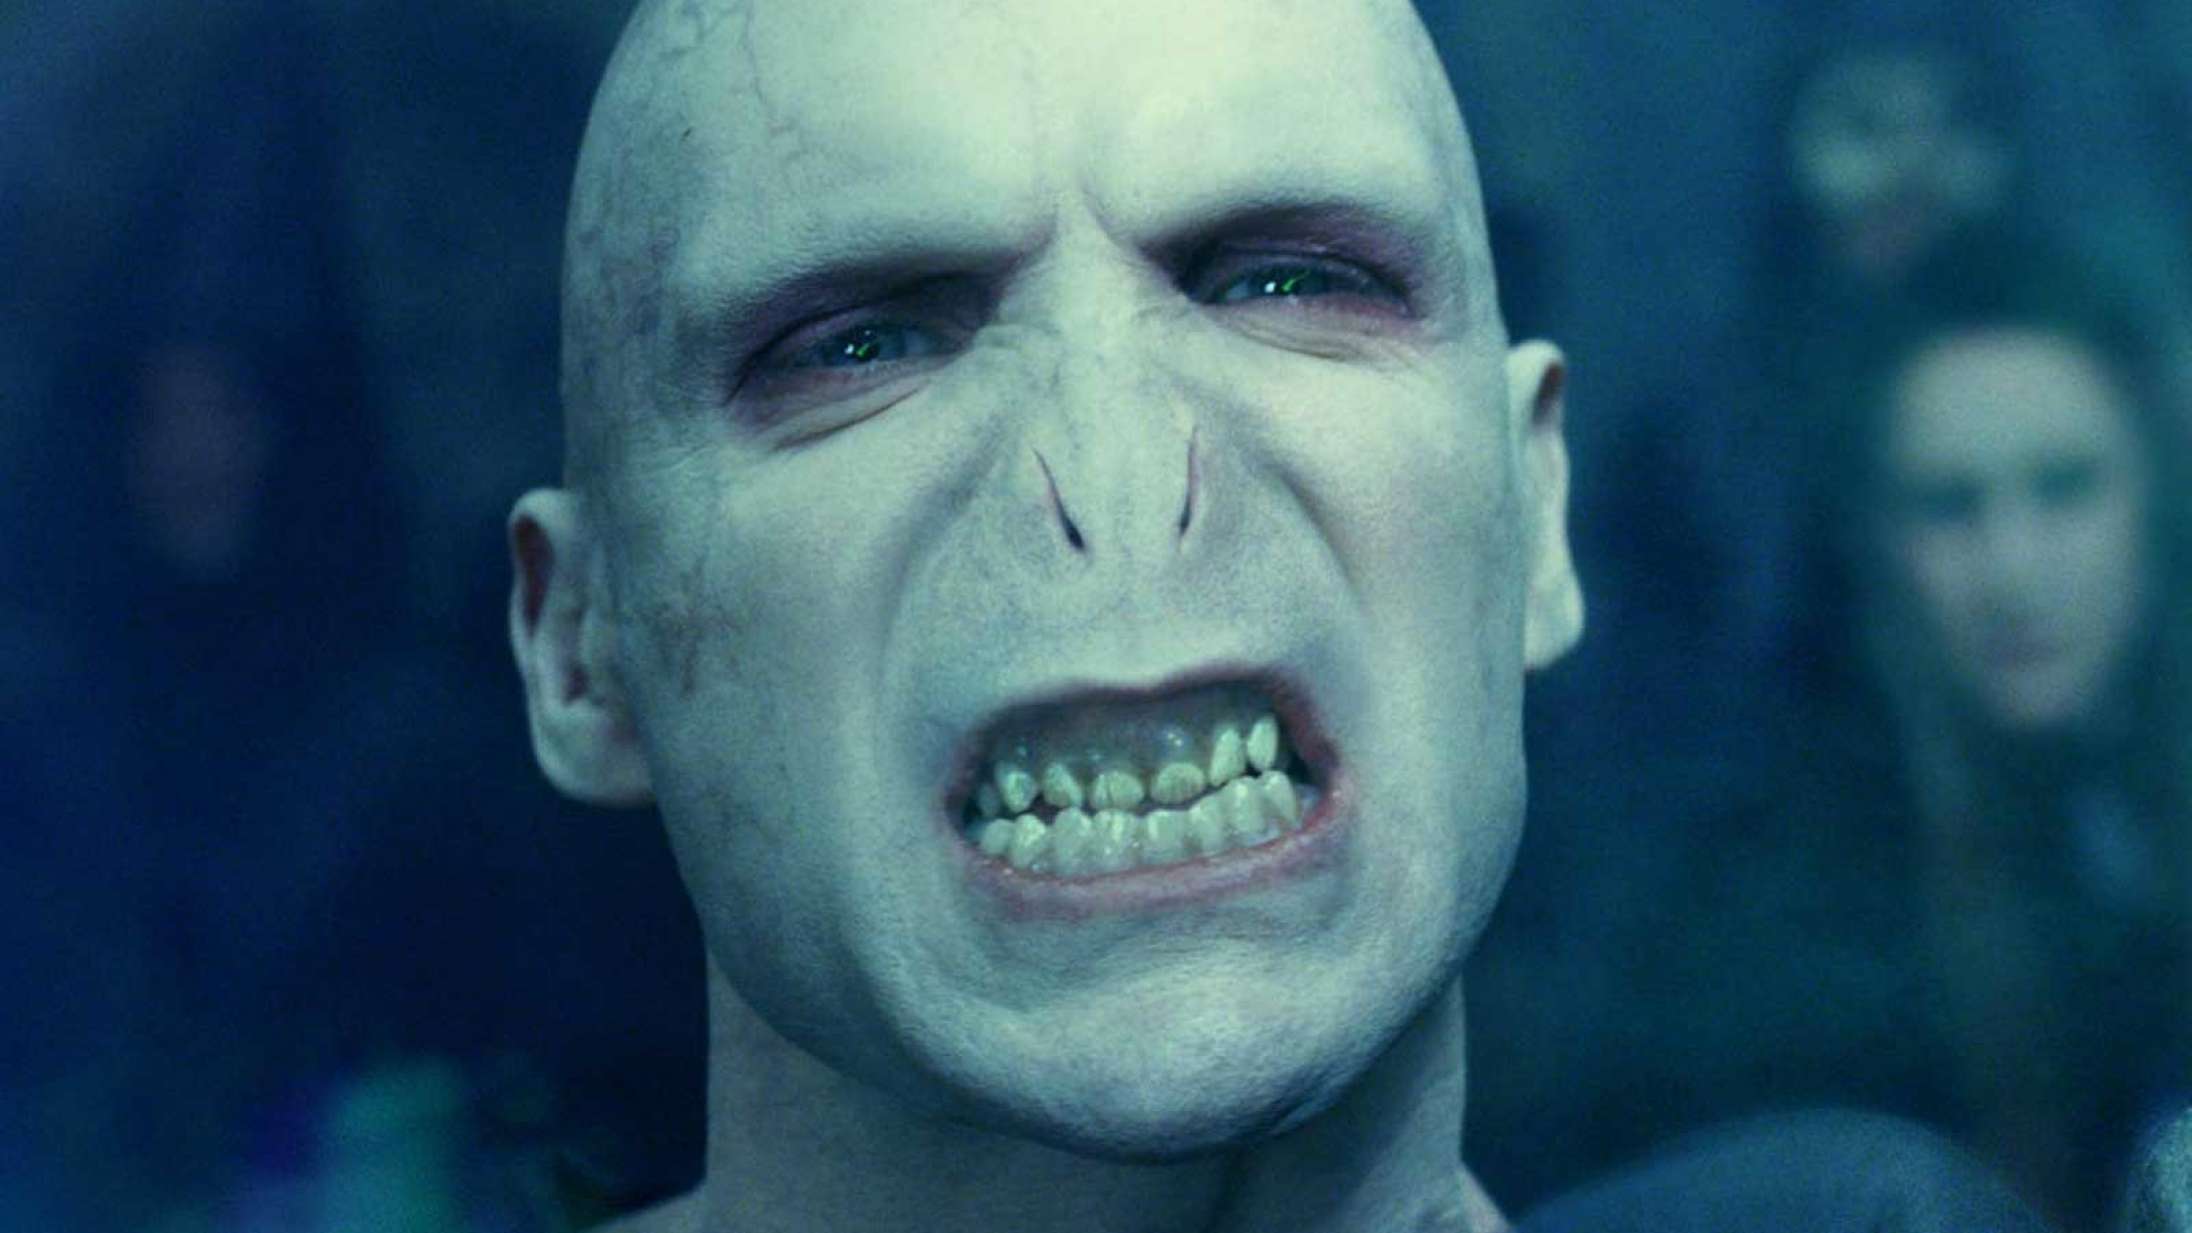 Shitstormen mod J.K. Rowling var »foruroligende«, mener Voldemort-skuespiller Ralph Fiennes